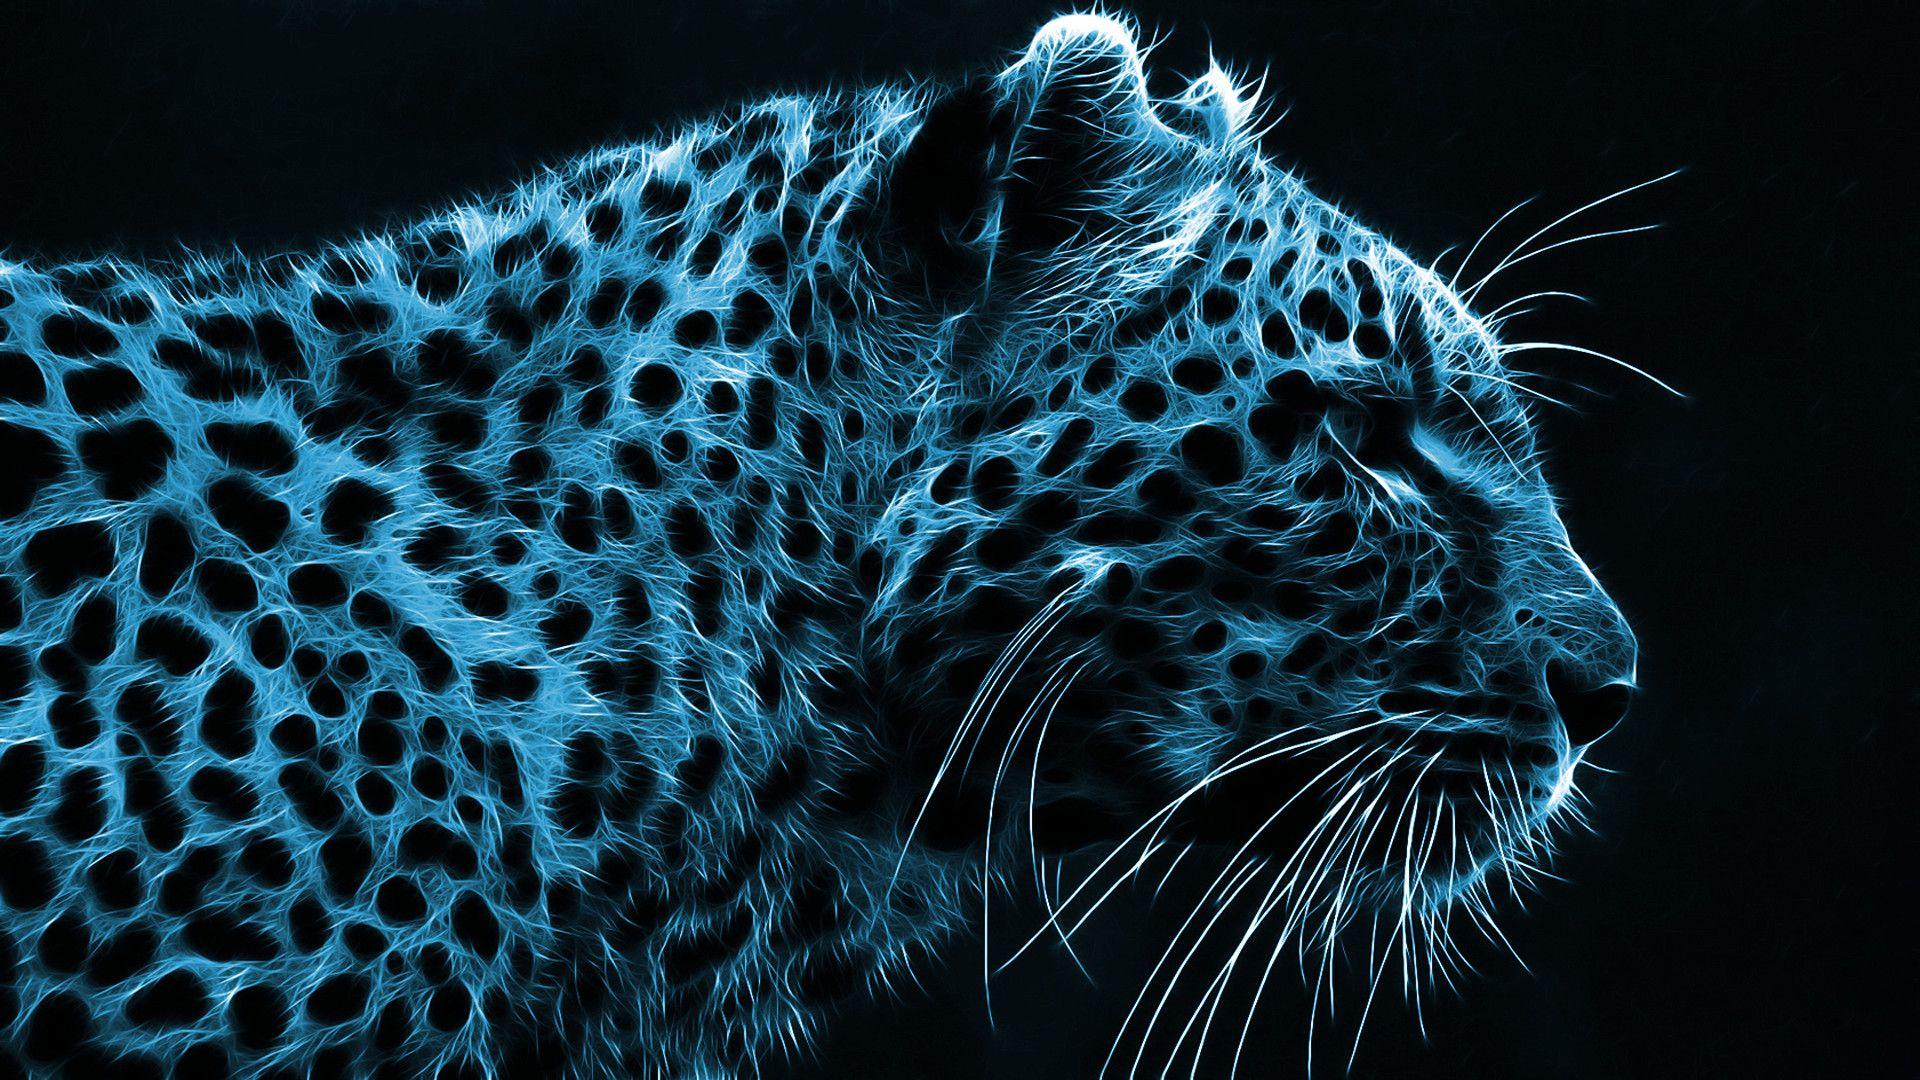 Black Cheetah Wallpapers - Top Free Black Cheetah Backgrounds ...